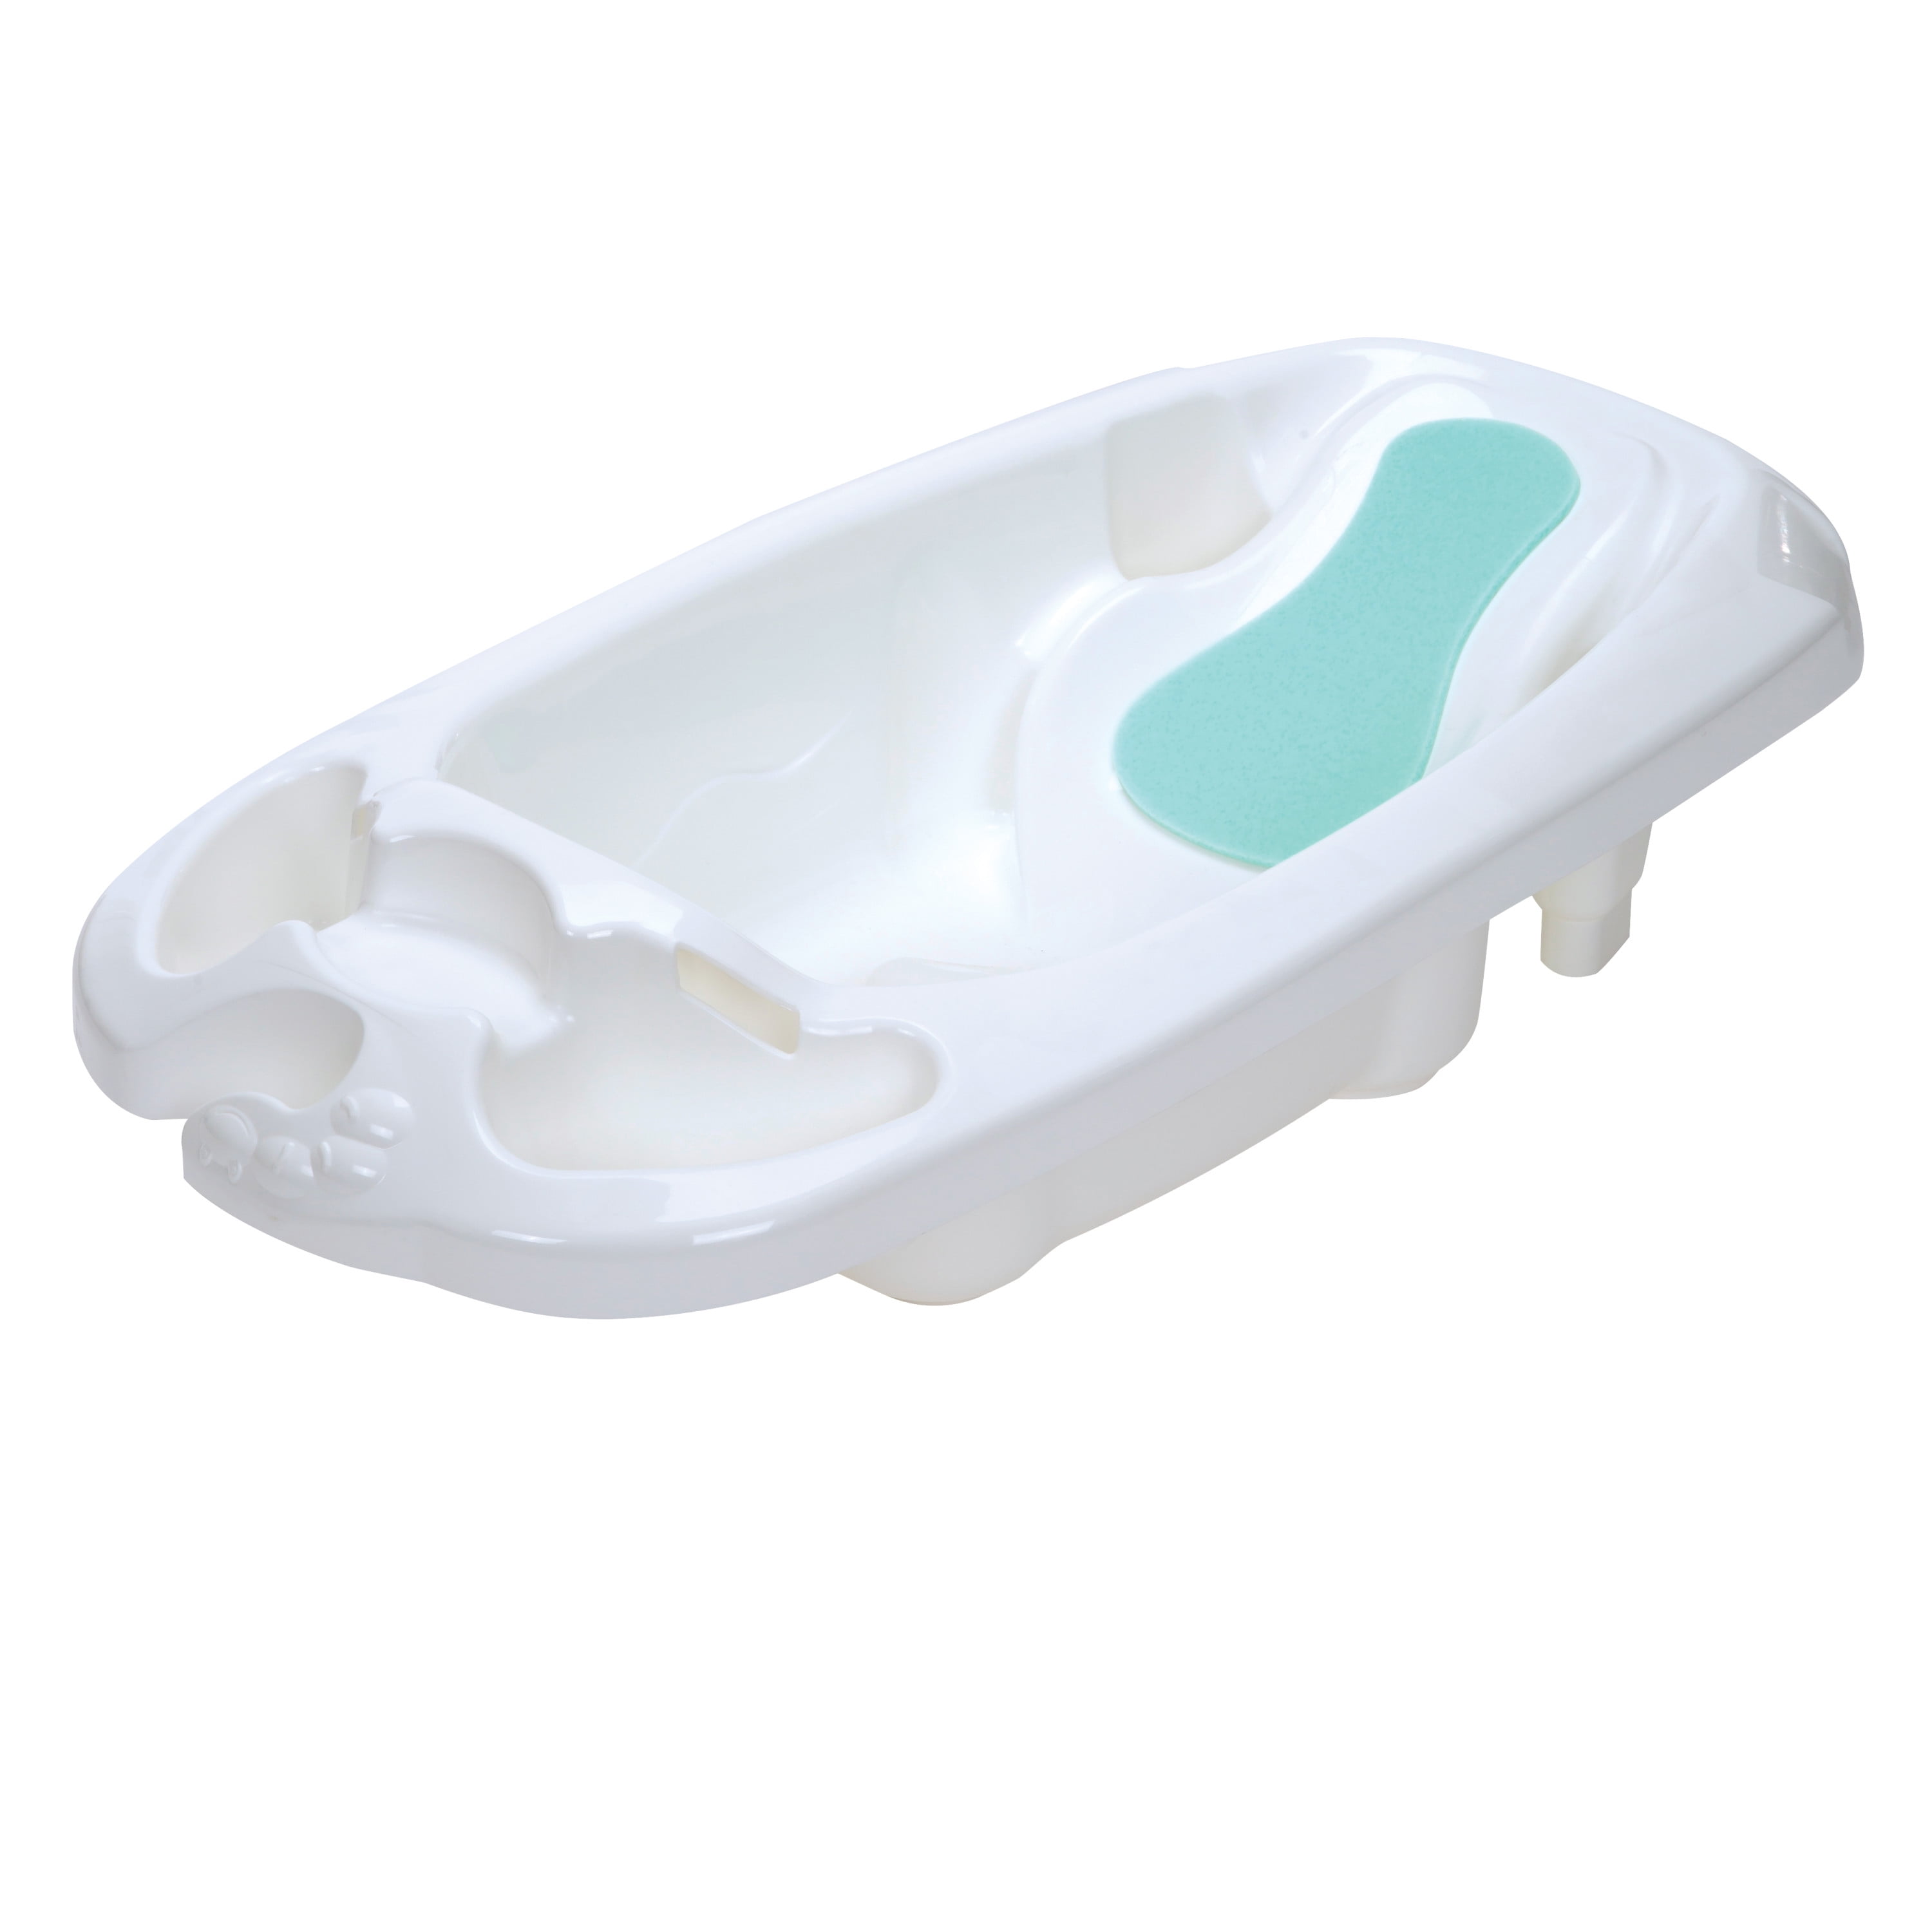 Safety 1ˢᵗ Newborn To Toddler Bathtub, Bathtub Protection For Babies